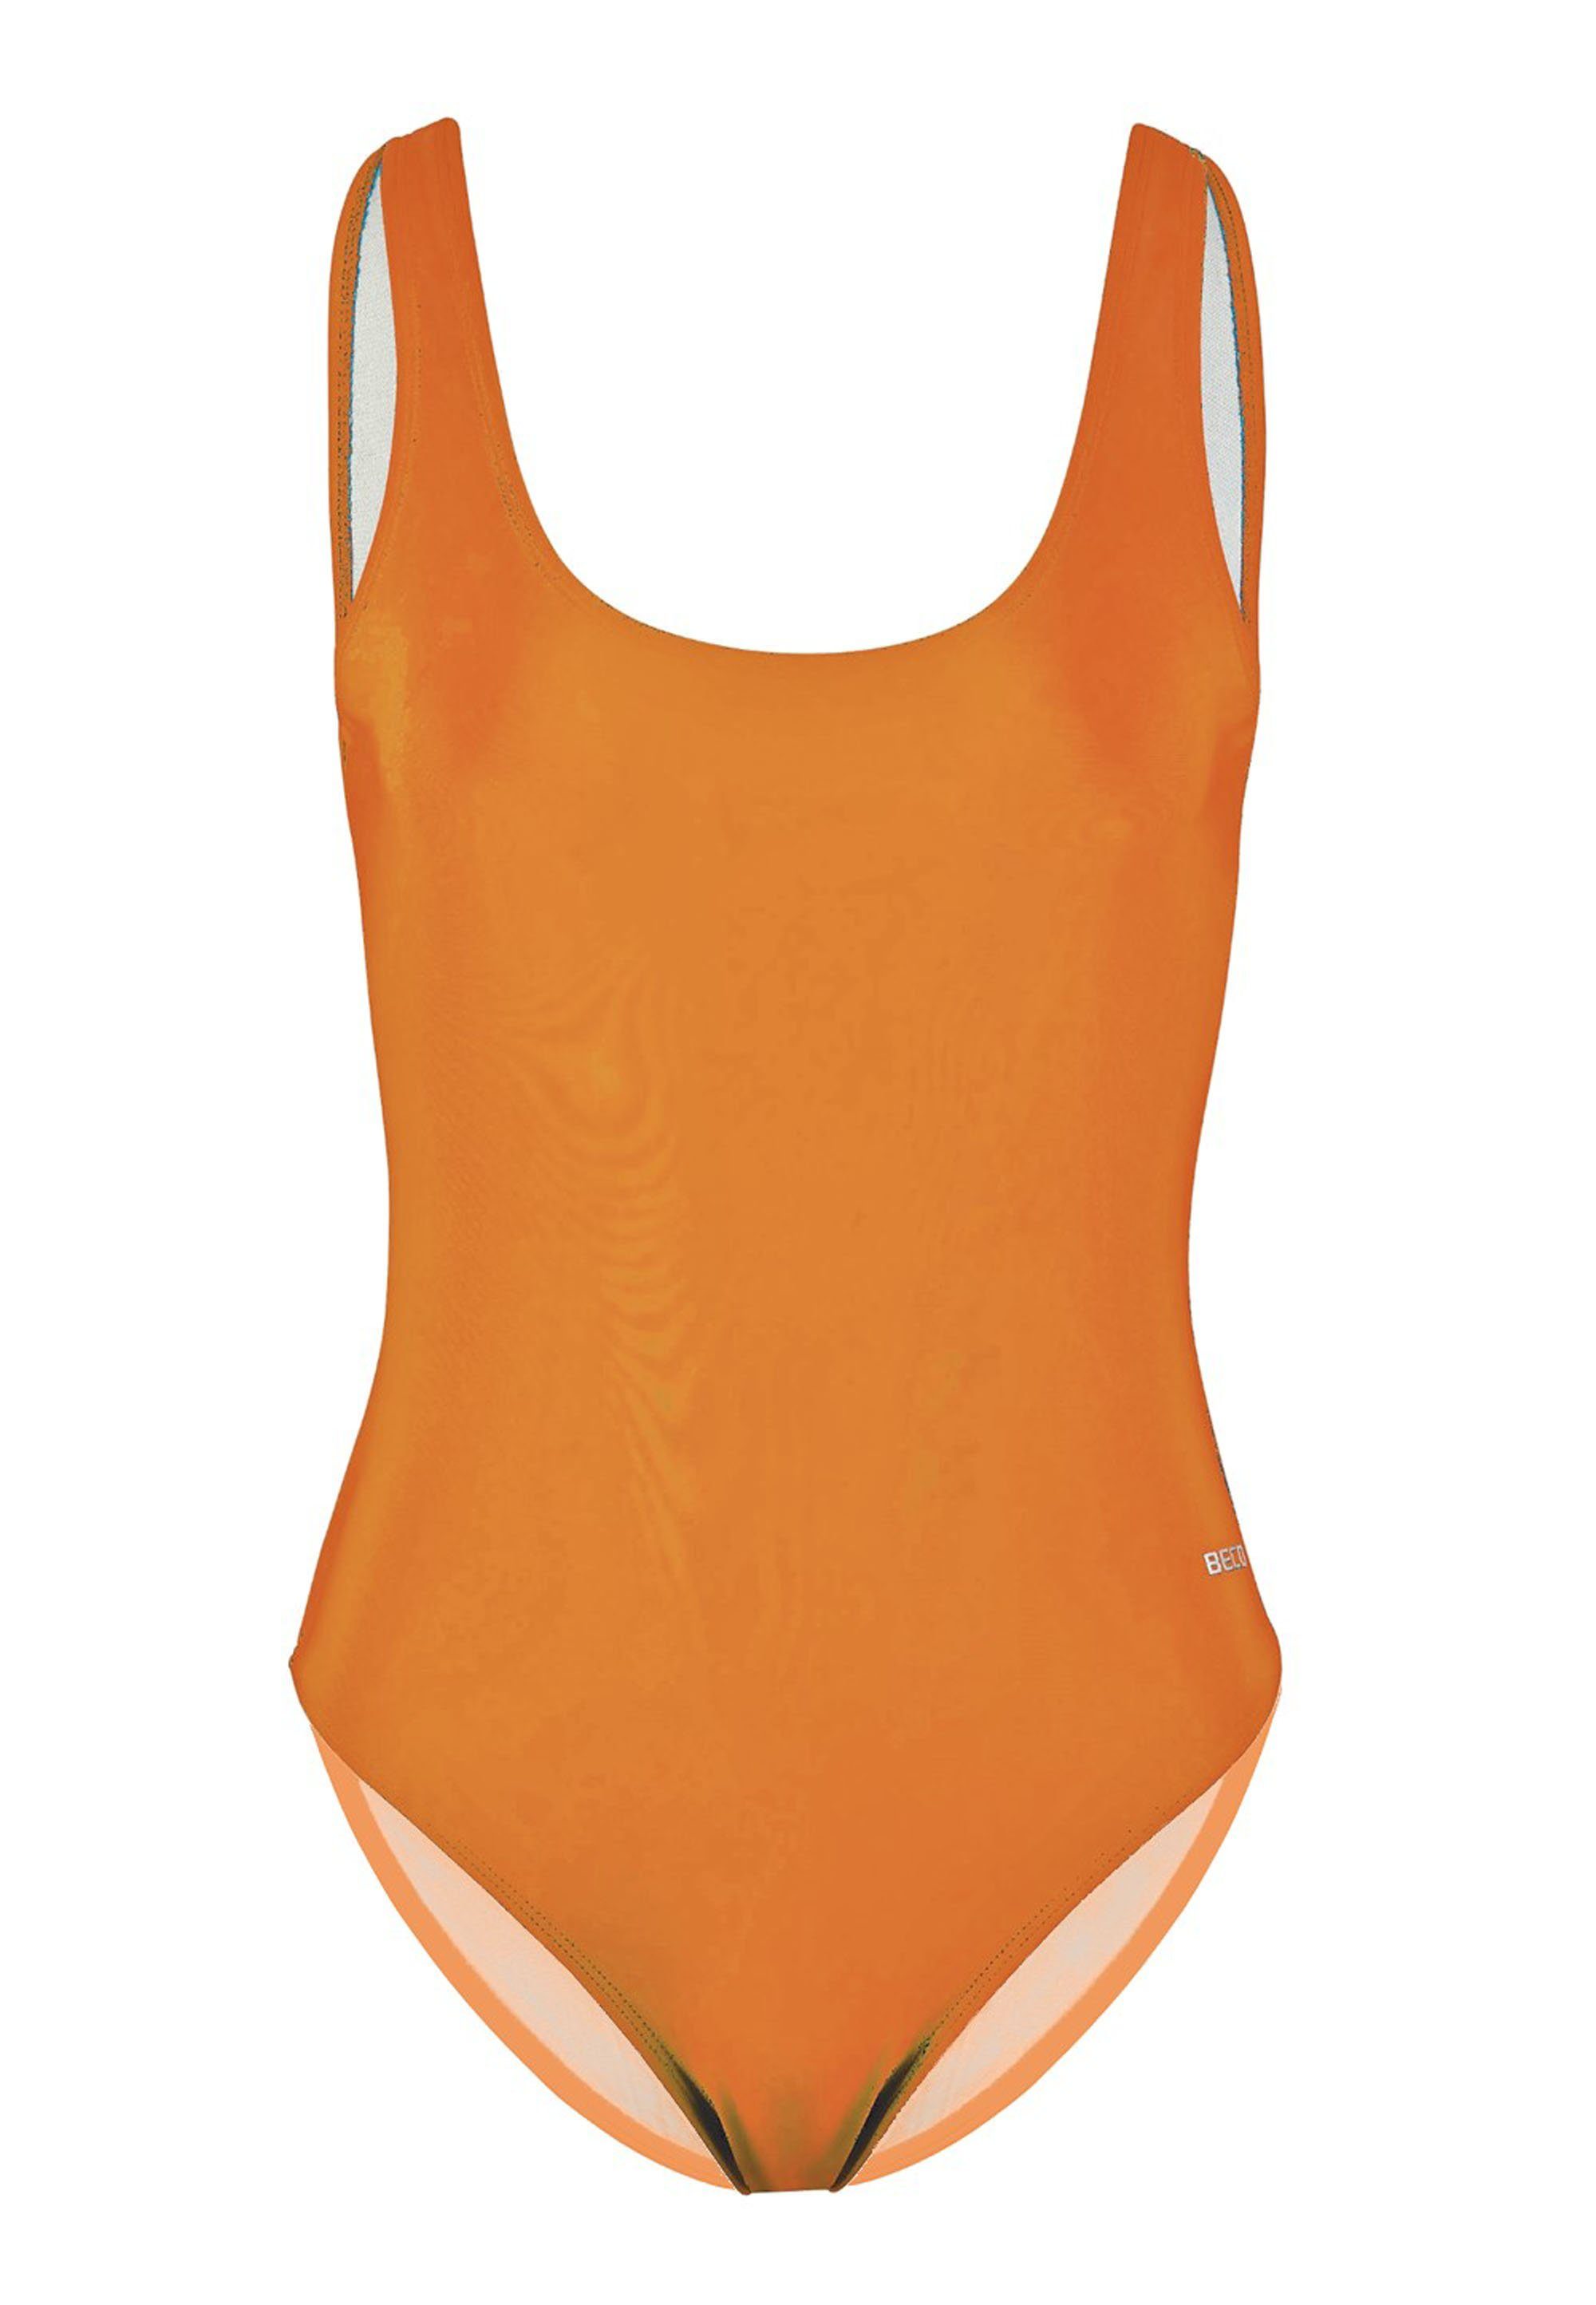 Beco Beermann Badeanzug BECO-Basic in sportlicher Optik orange